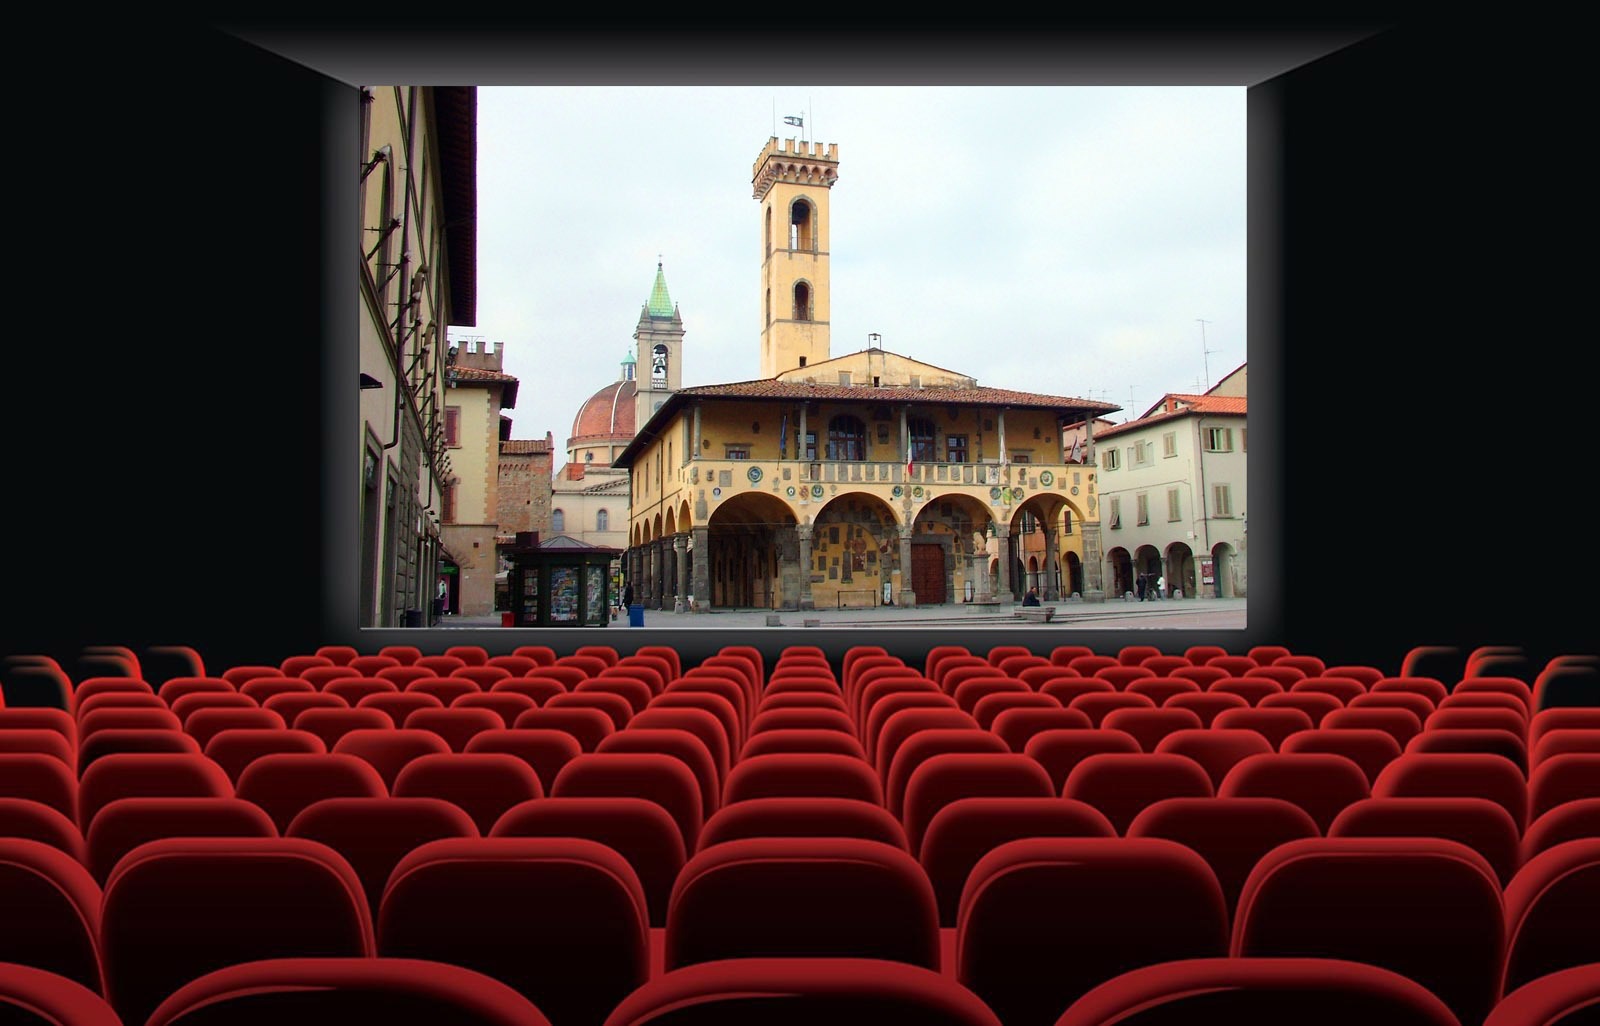 ValdarnoCinema FilmFestival 2020 – Il Programma ed i Premi